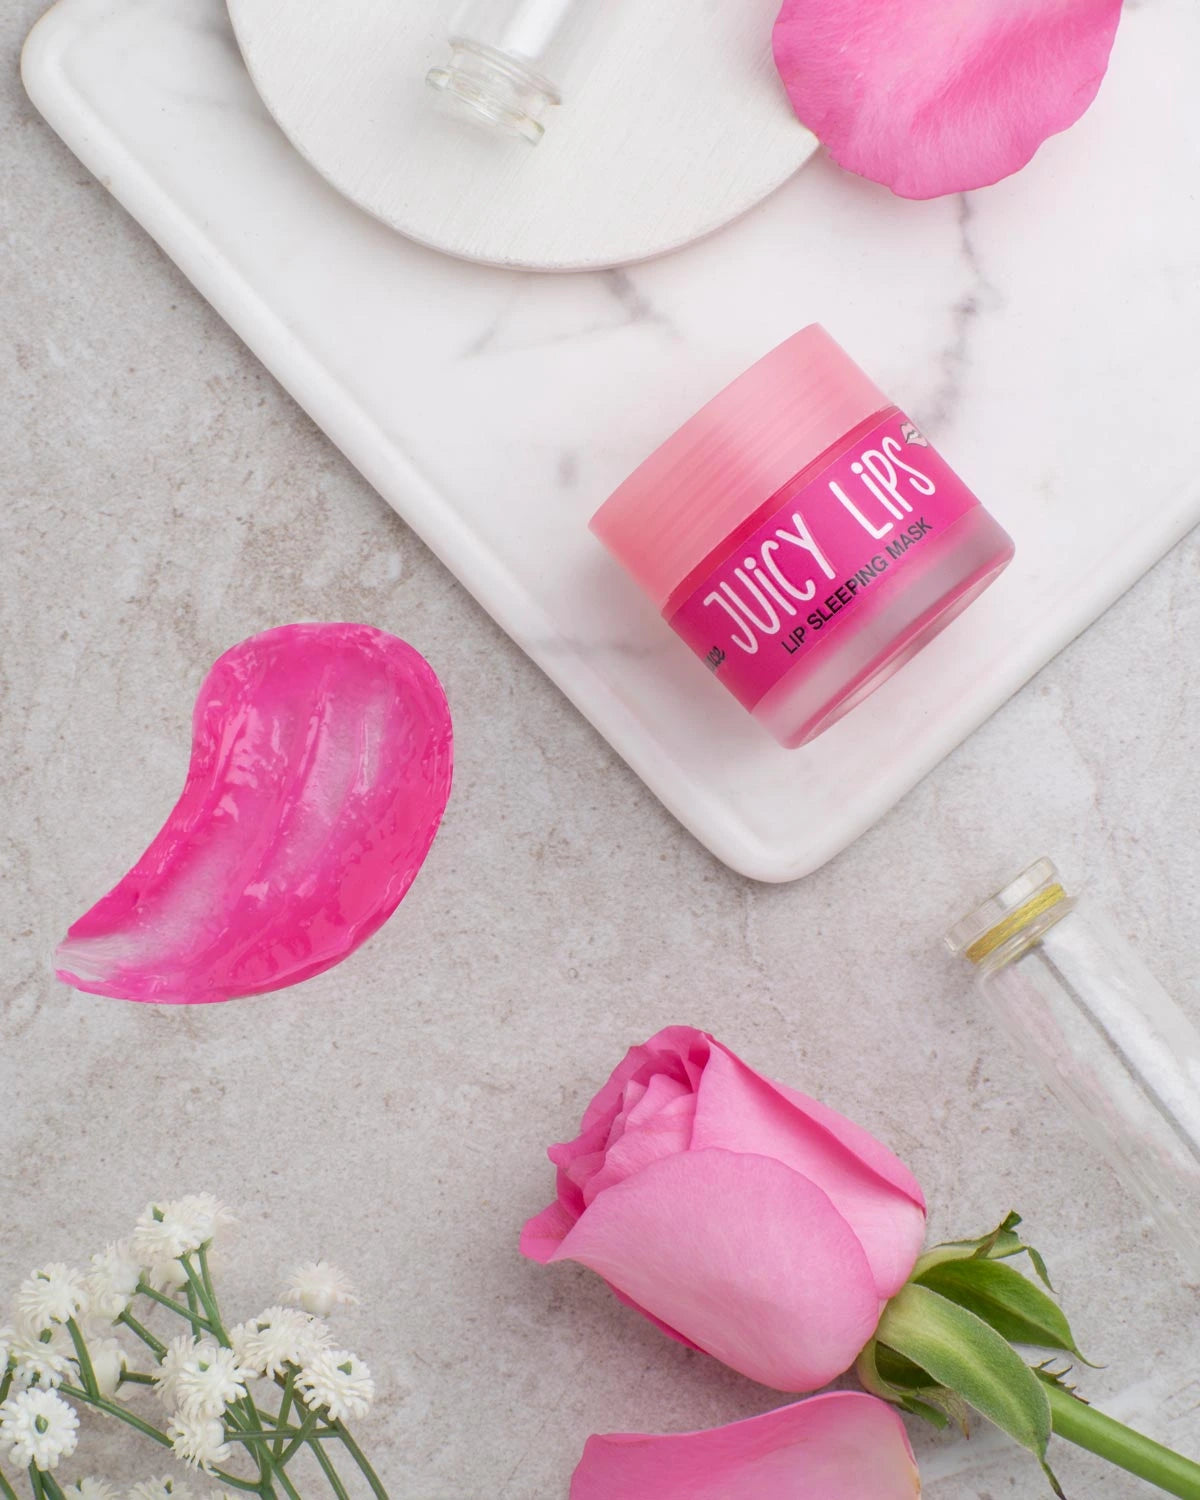 Sugassence Pink Lips Gift Basket – Worth Rs. 1800